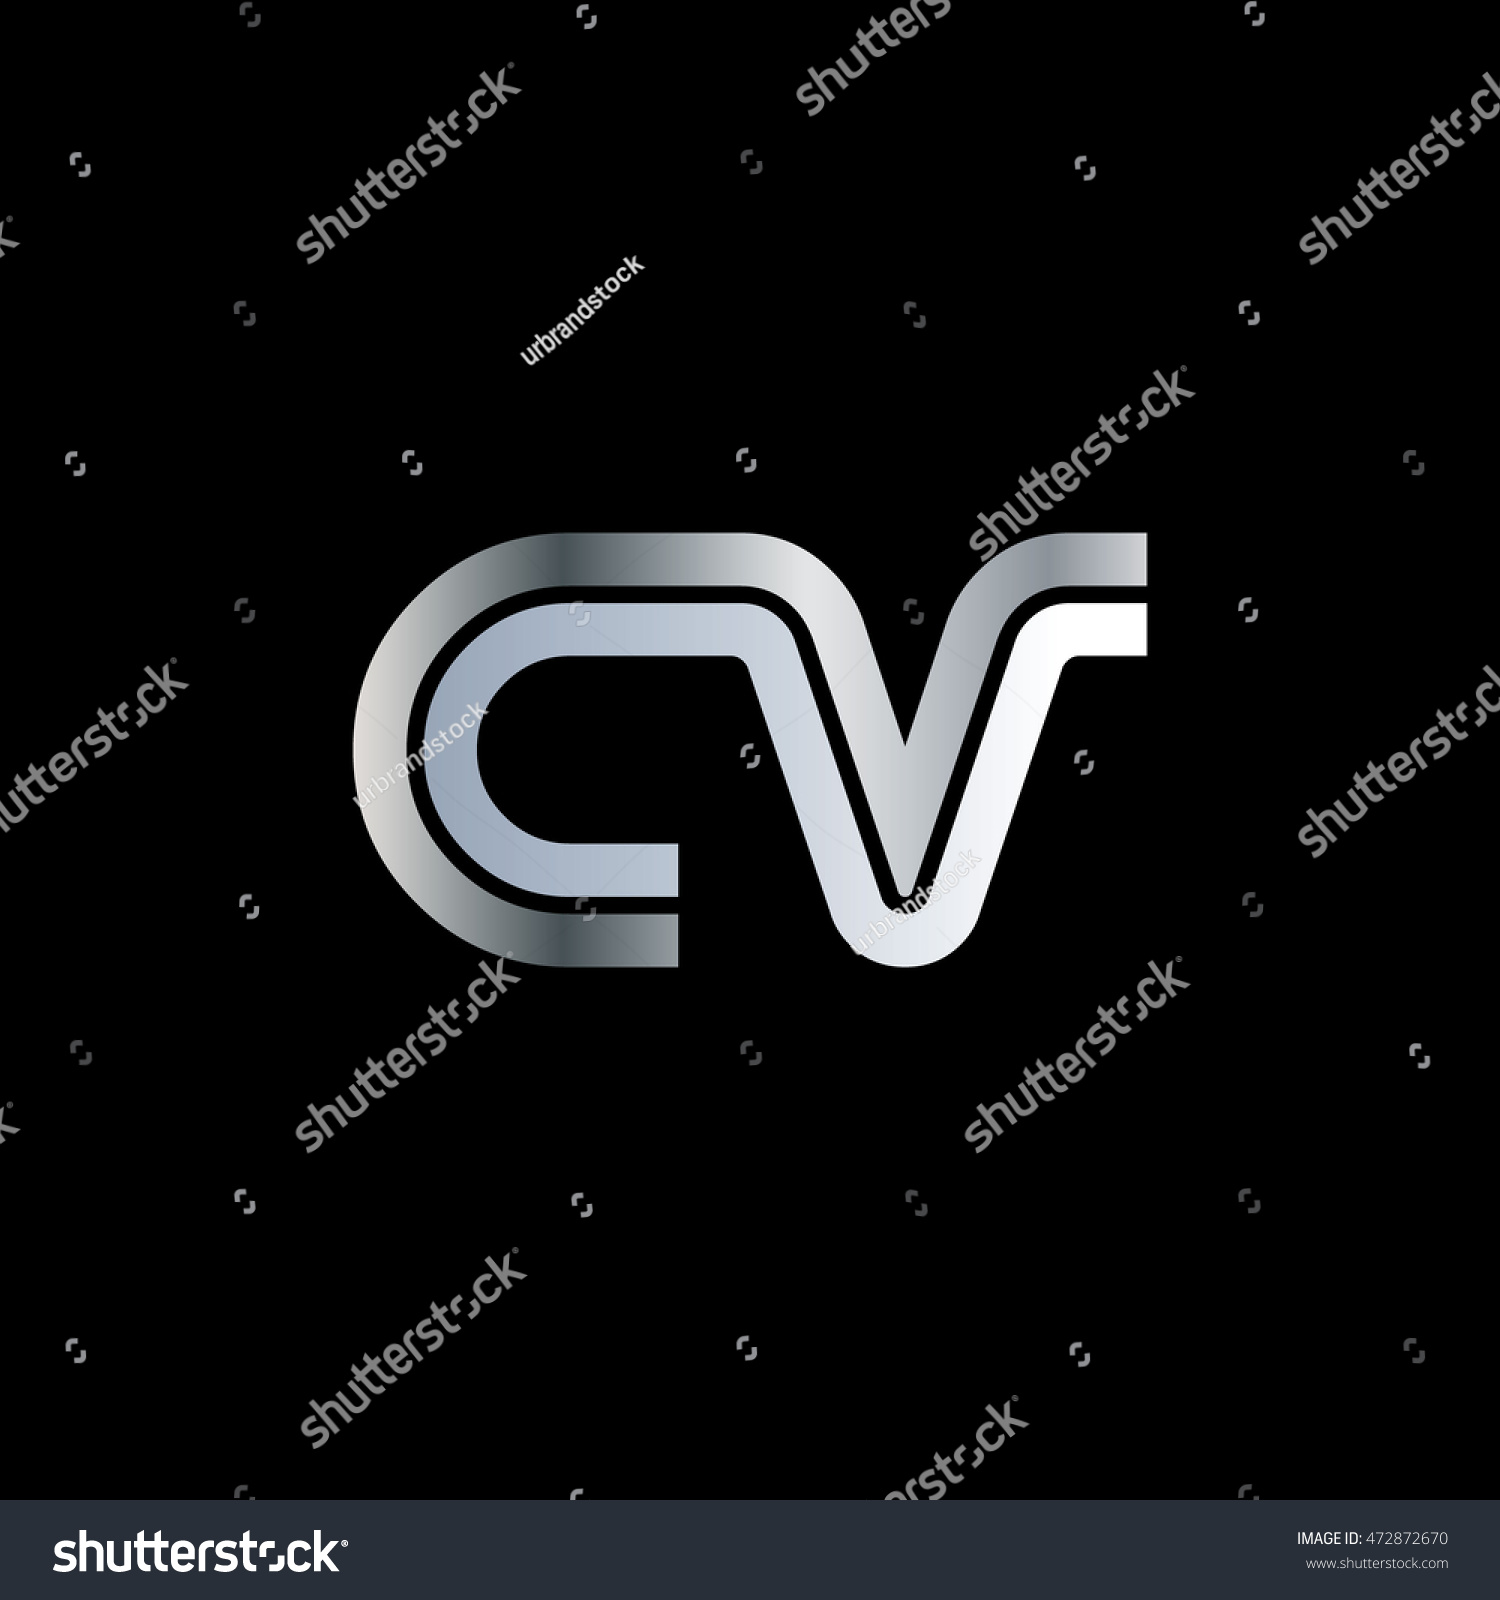 initial letter cv linked font logo stock vector 472872670